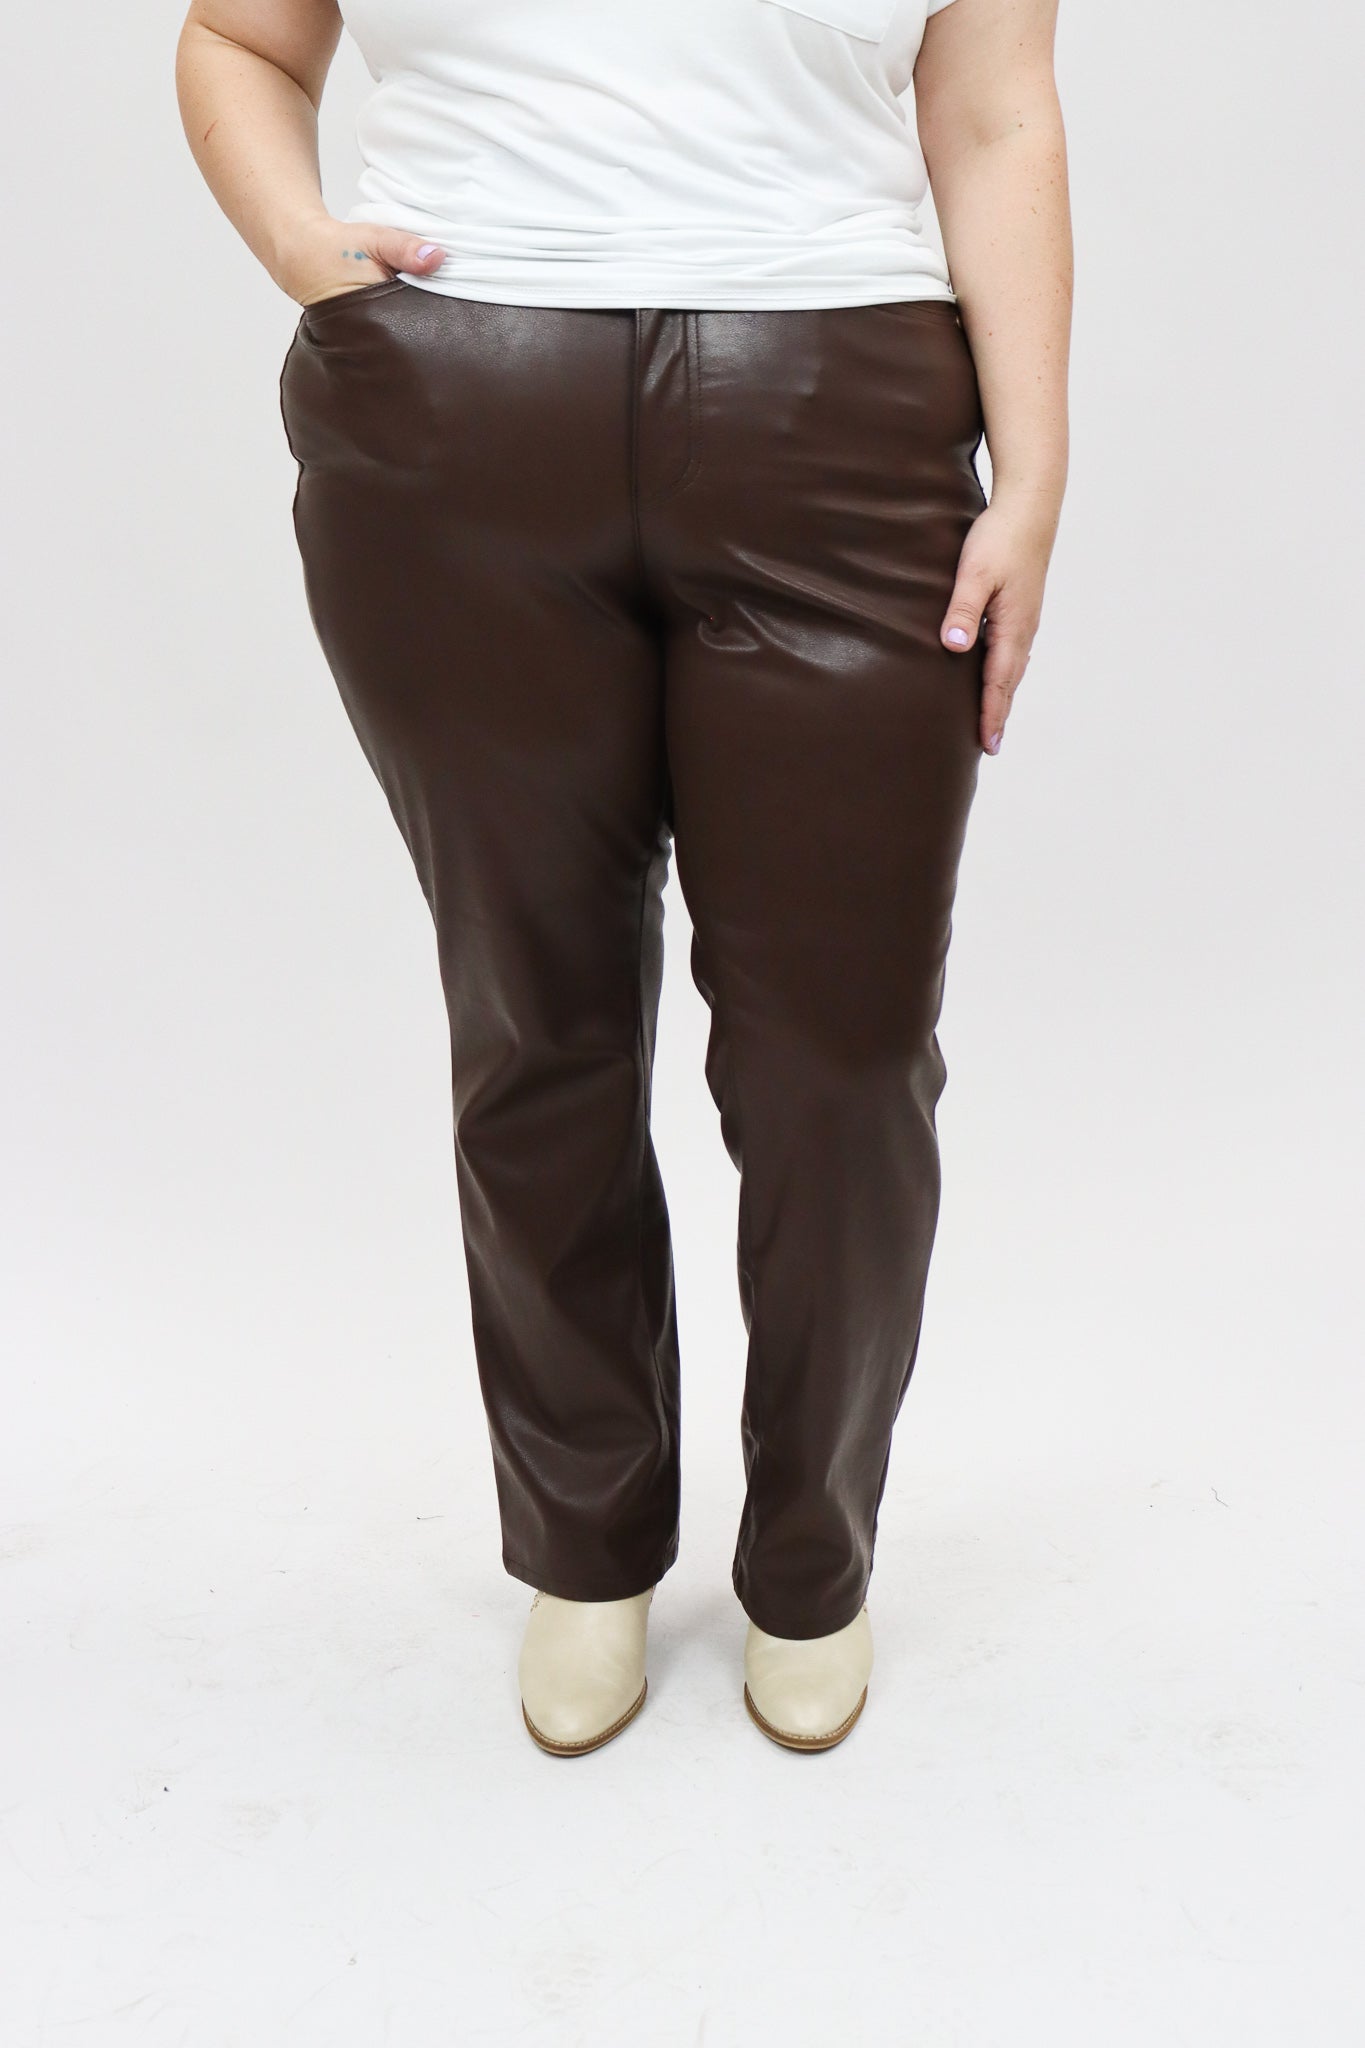 Judy Blue Tanya Control Top Faux Leather Pants in Black - Bella Jade